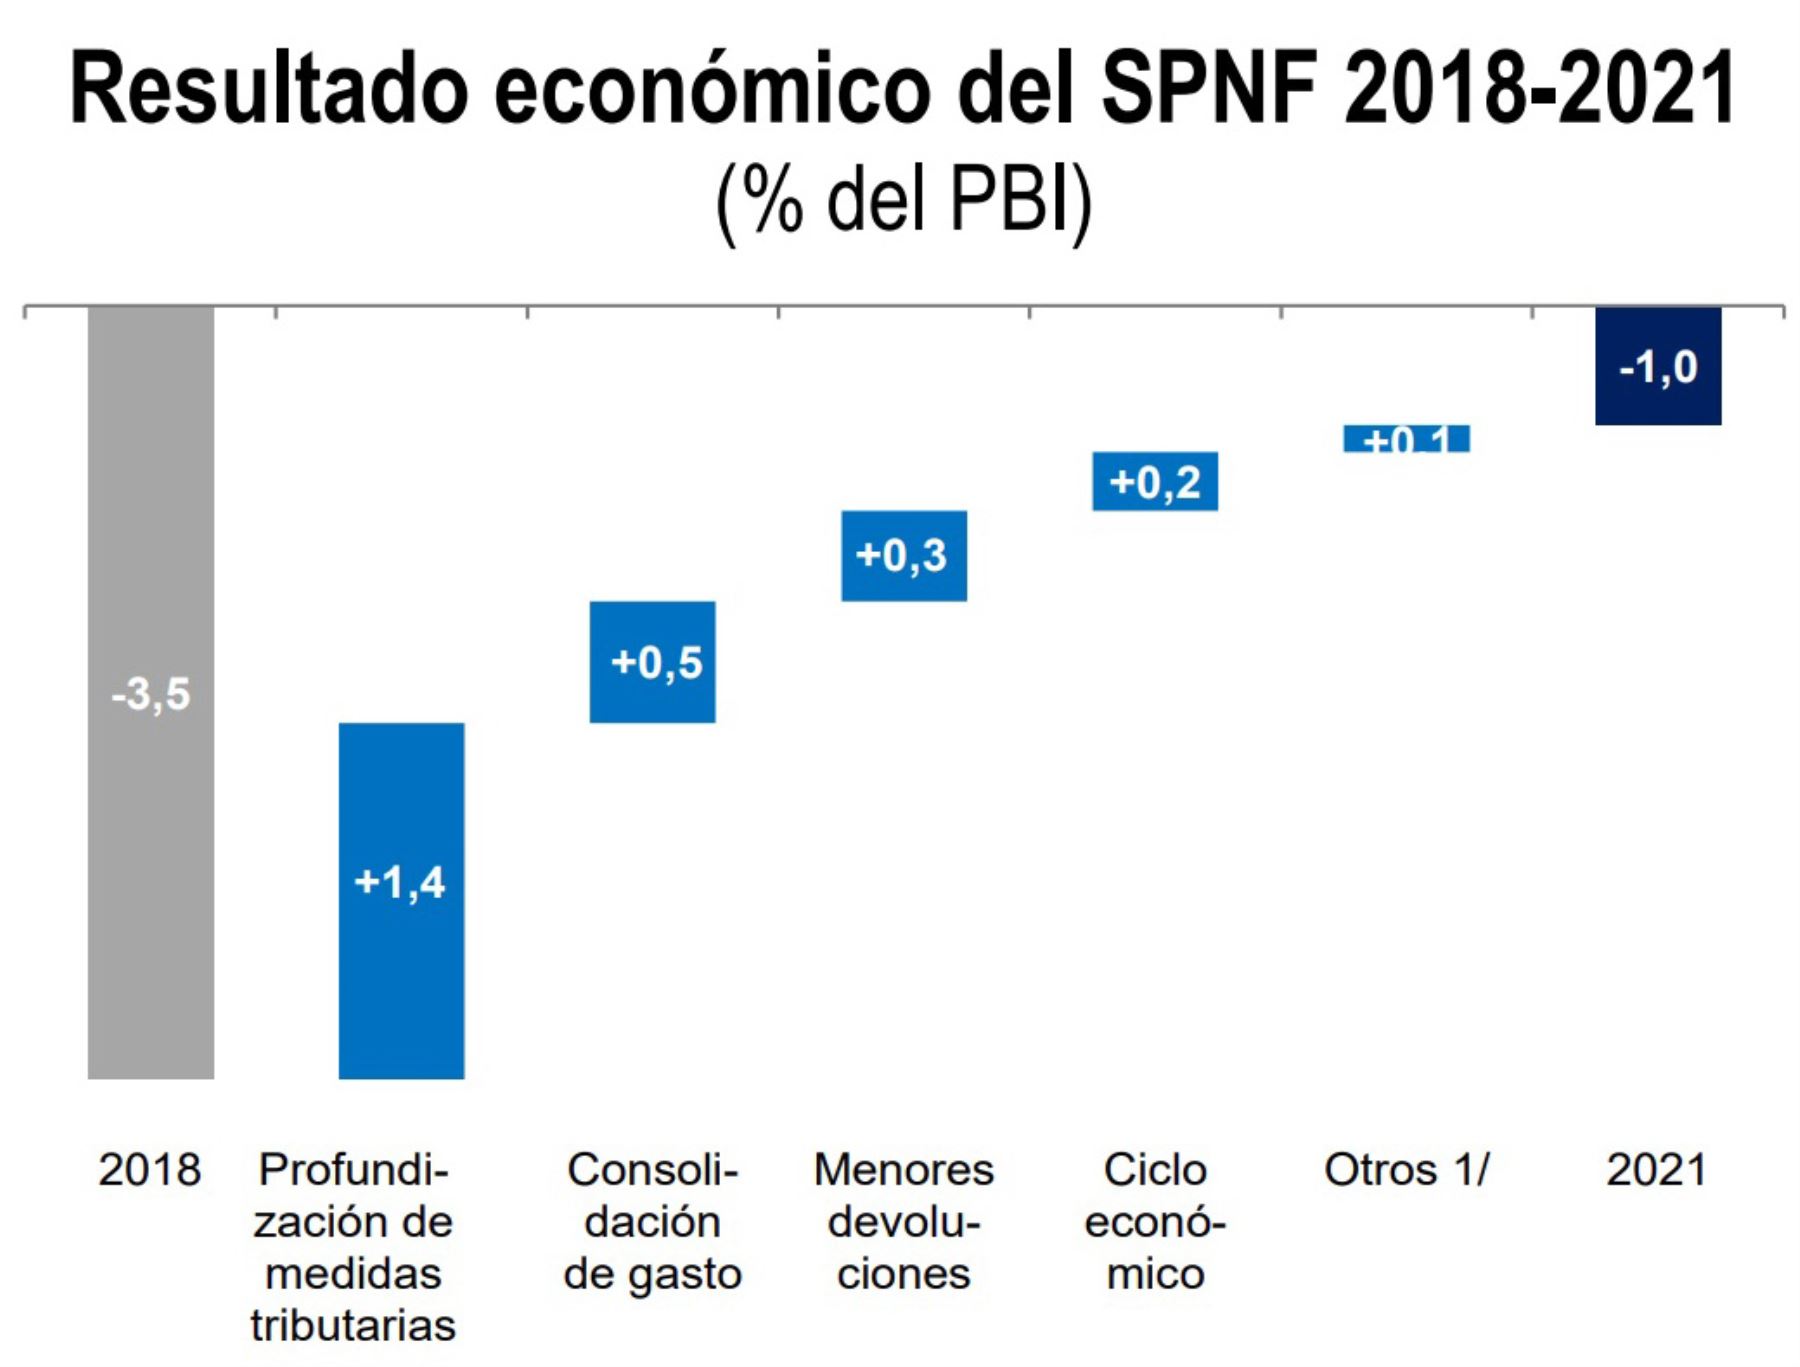 En 2018, el déficit fiscal del SPNF se expandirá hasta 3.5% del PBI. En adelante, el déficit fiscal se reducirá gradualmente a 2.9% del PBI en 2019, a 2.1% del PBI en 2020 y a 1.0% del PBI en 2021.